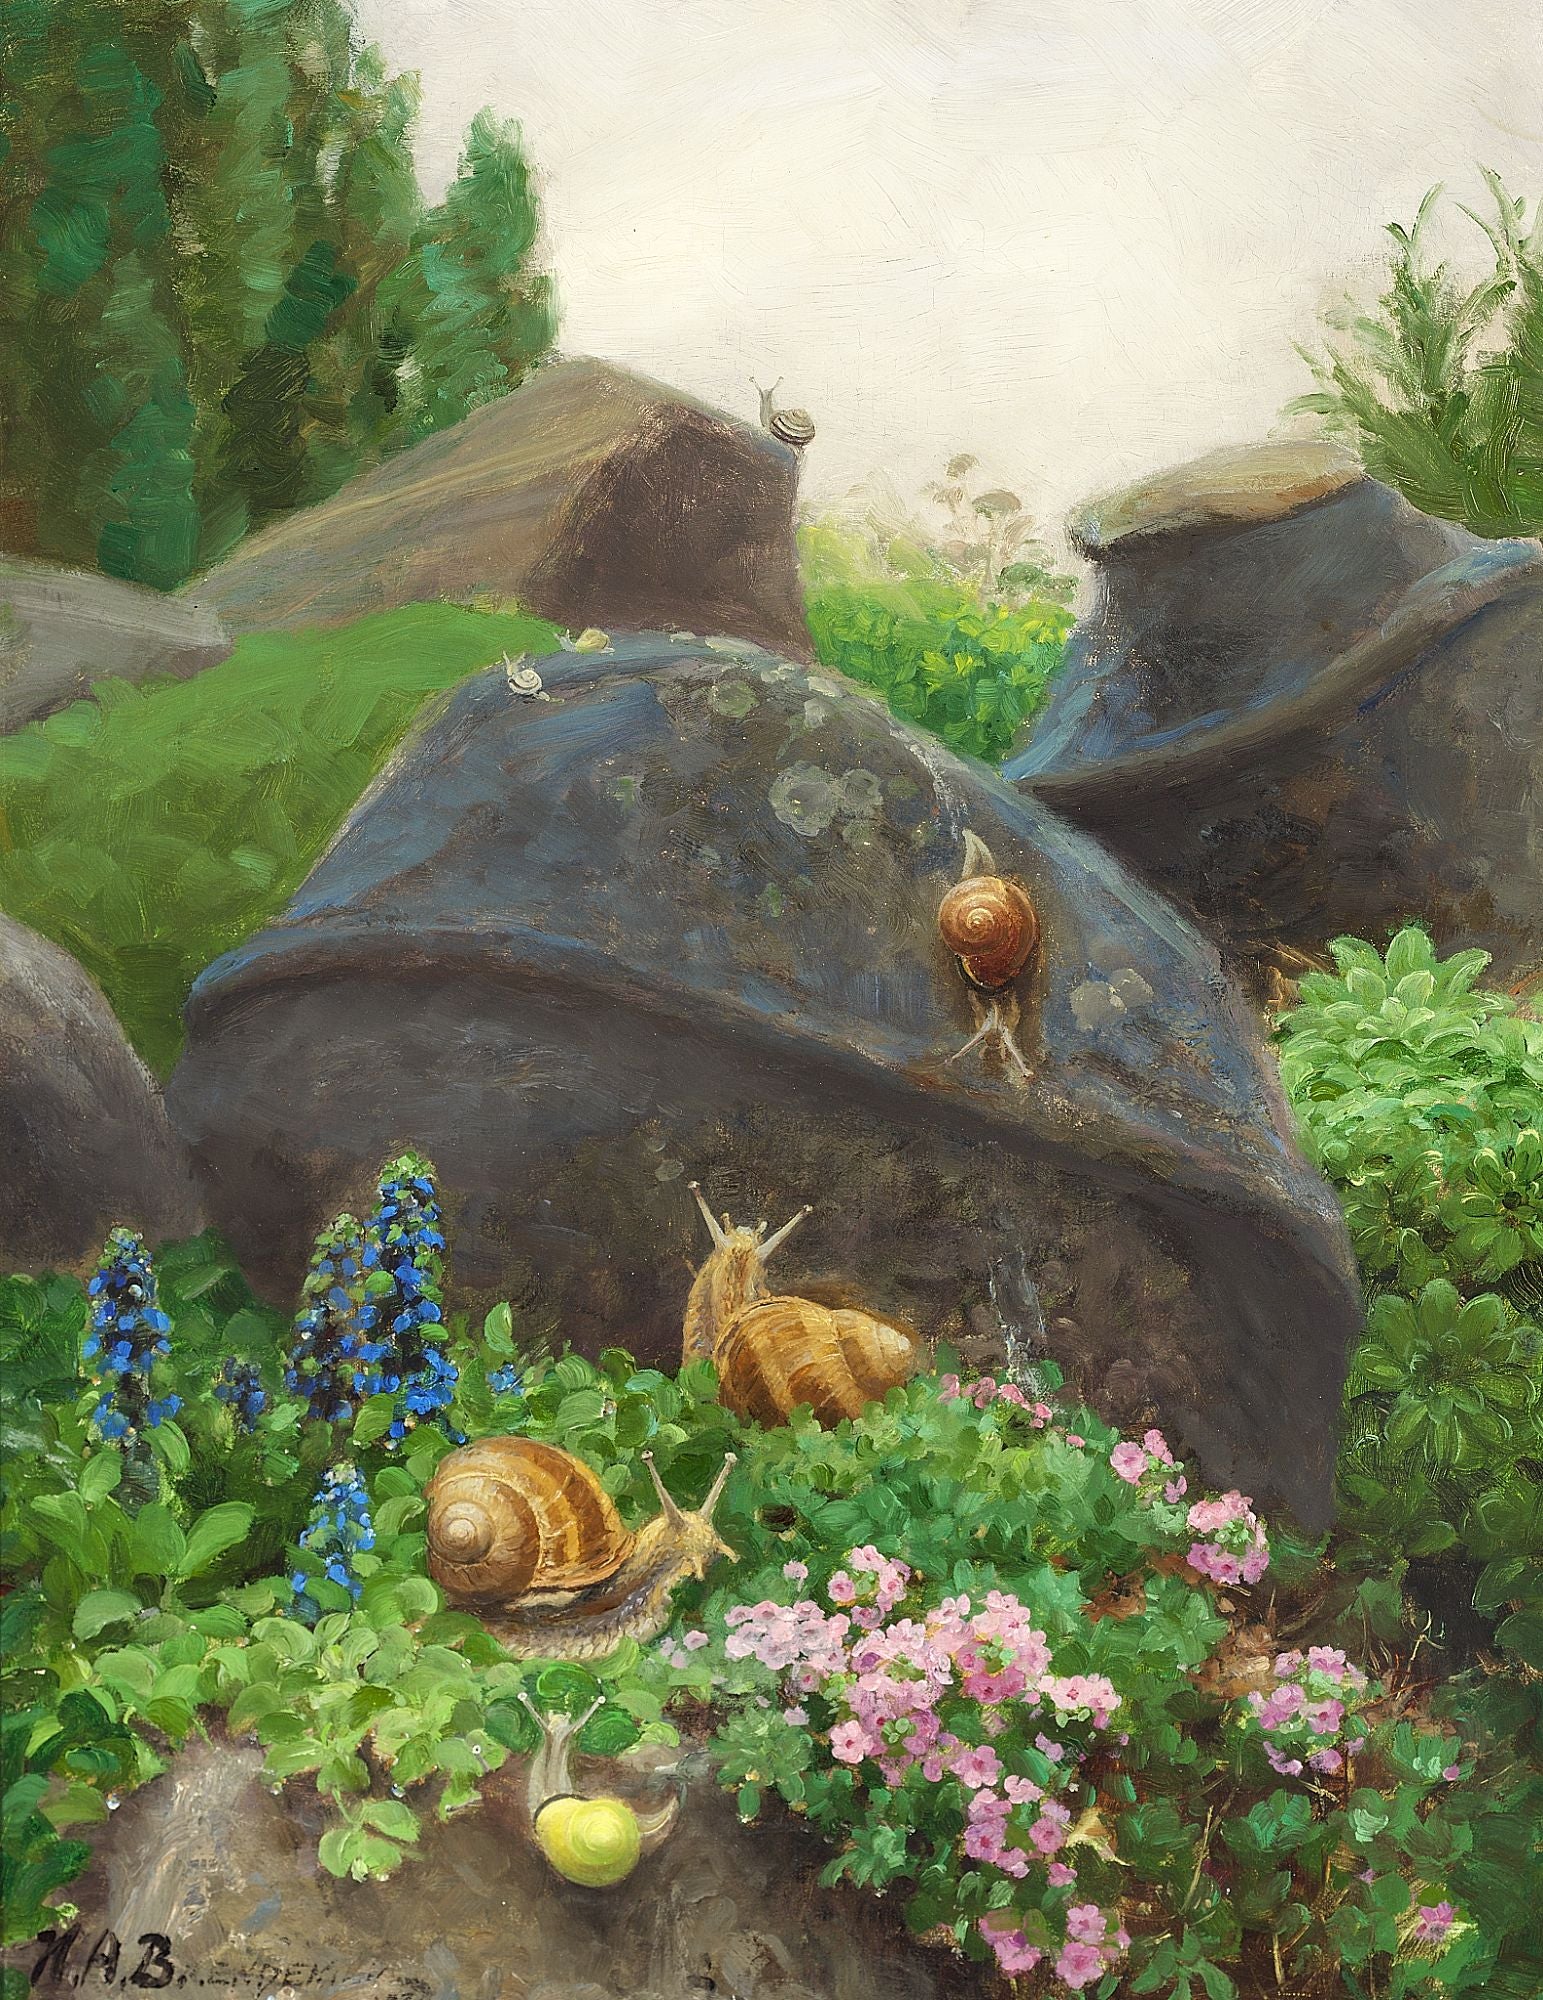 Escargots de vigne dans le jardin du peintre Brendekilde - Hans Andersen Brendekilde